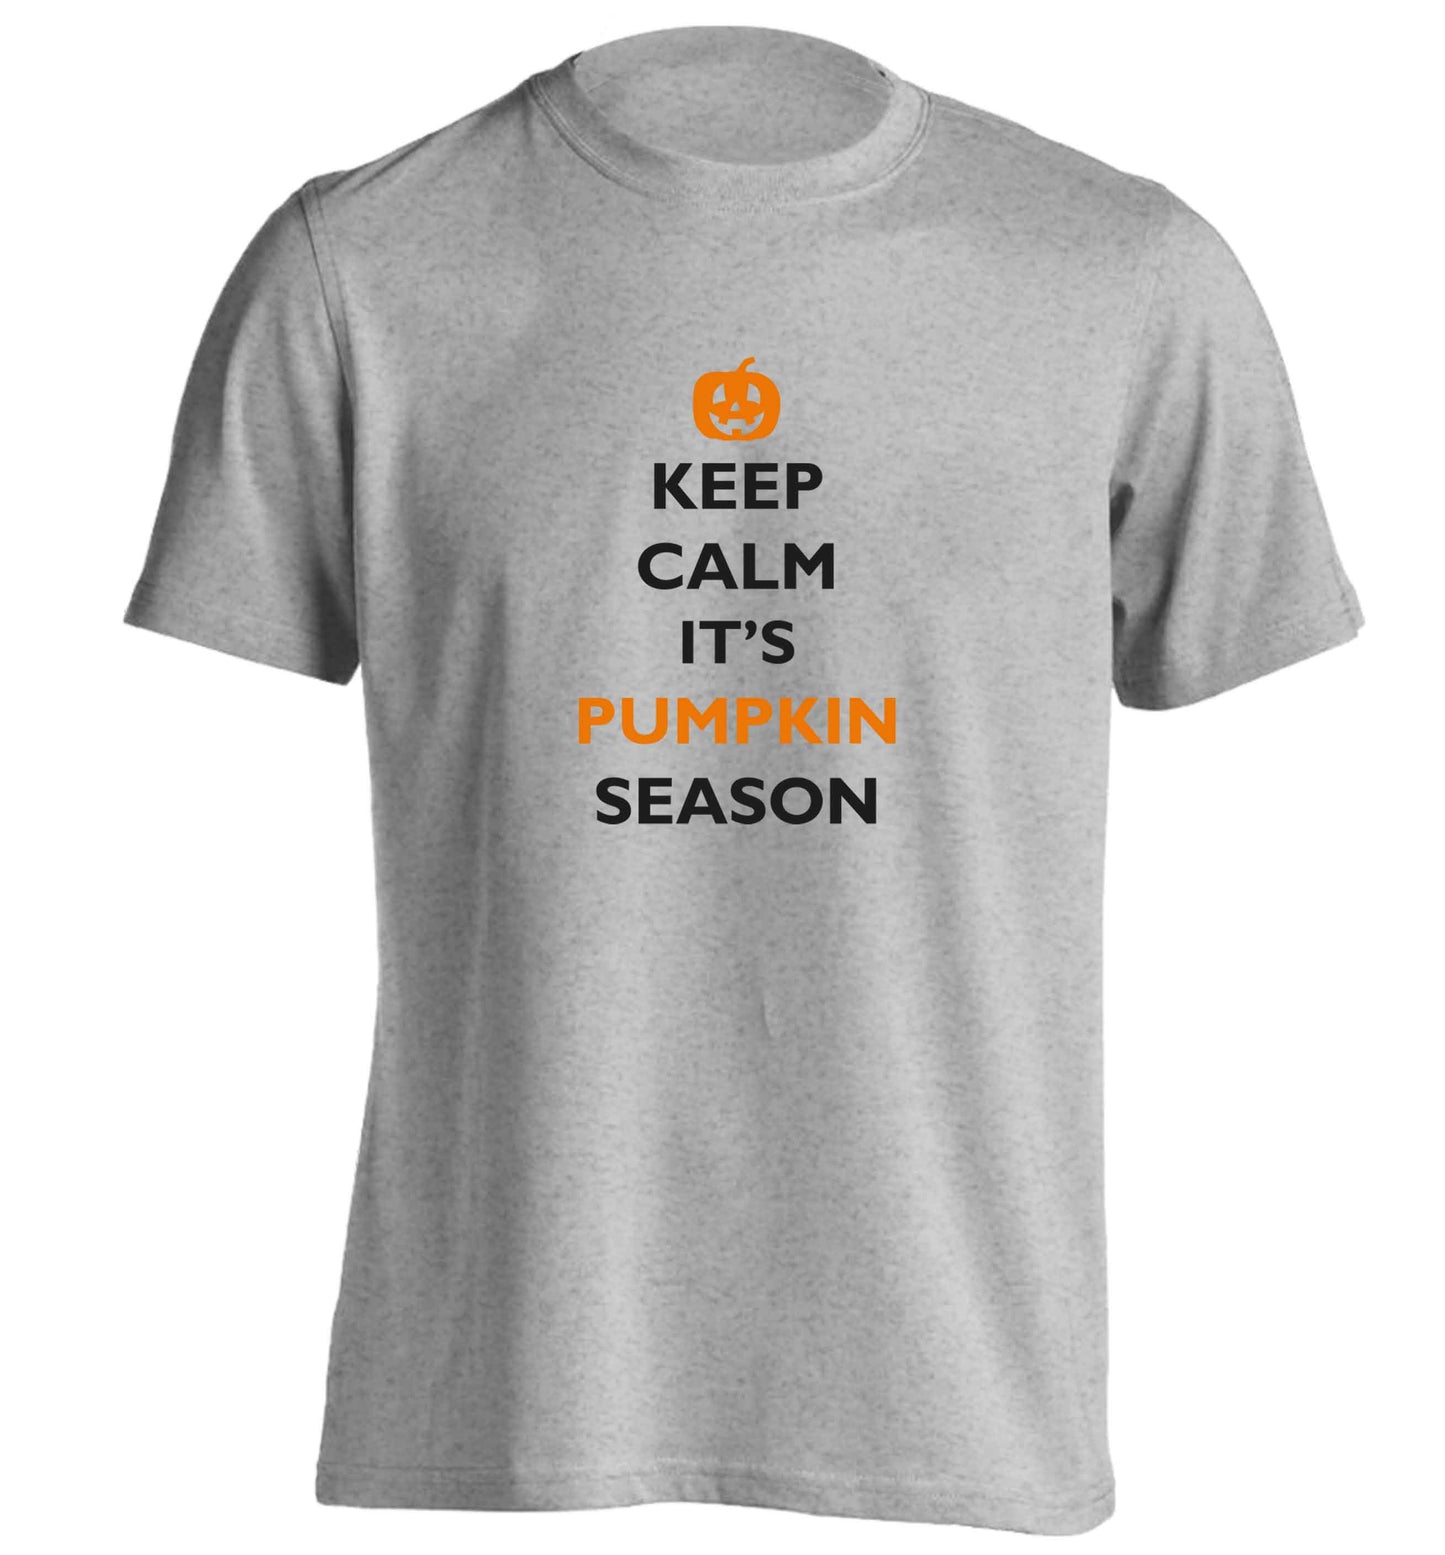 Calm Pumpkin Season adults unisex grey Tshirt 2XL